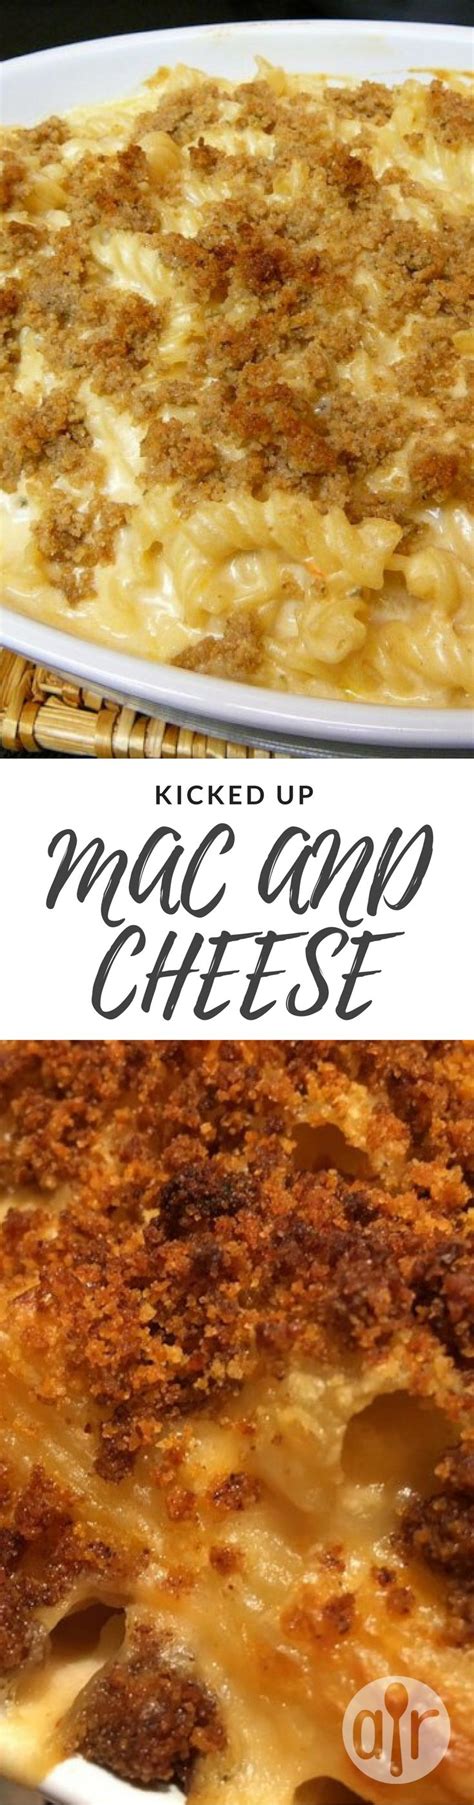 Kicked Up Mac And Cheese Recipe Recipe Recipes Savoury Food Easy